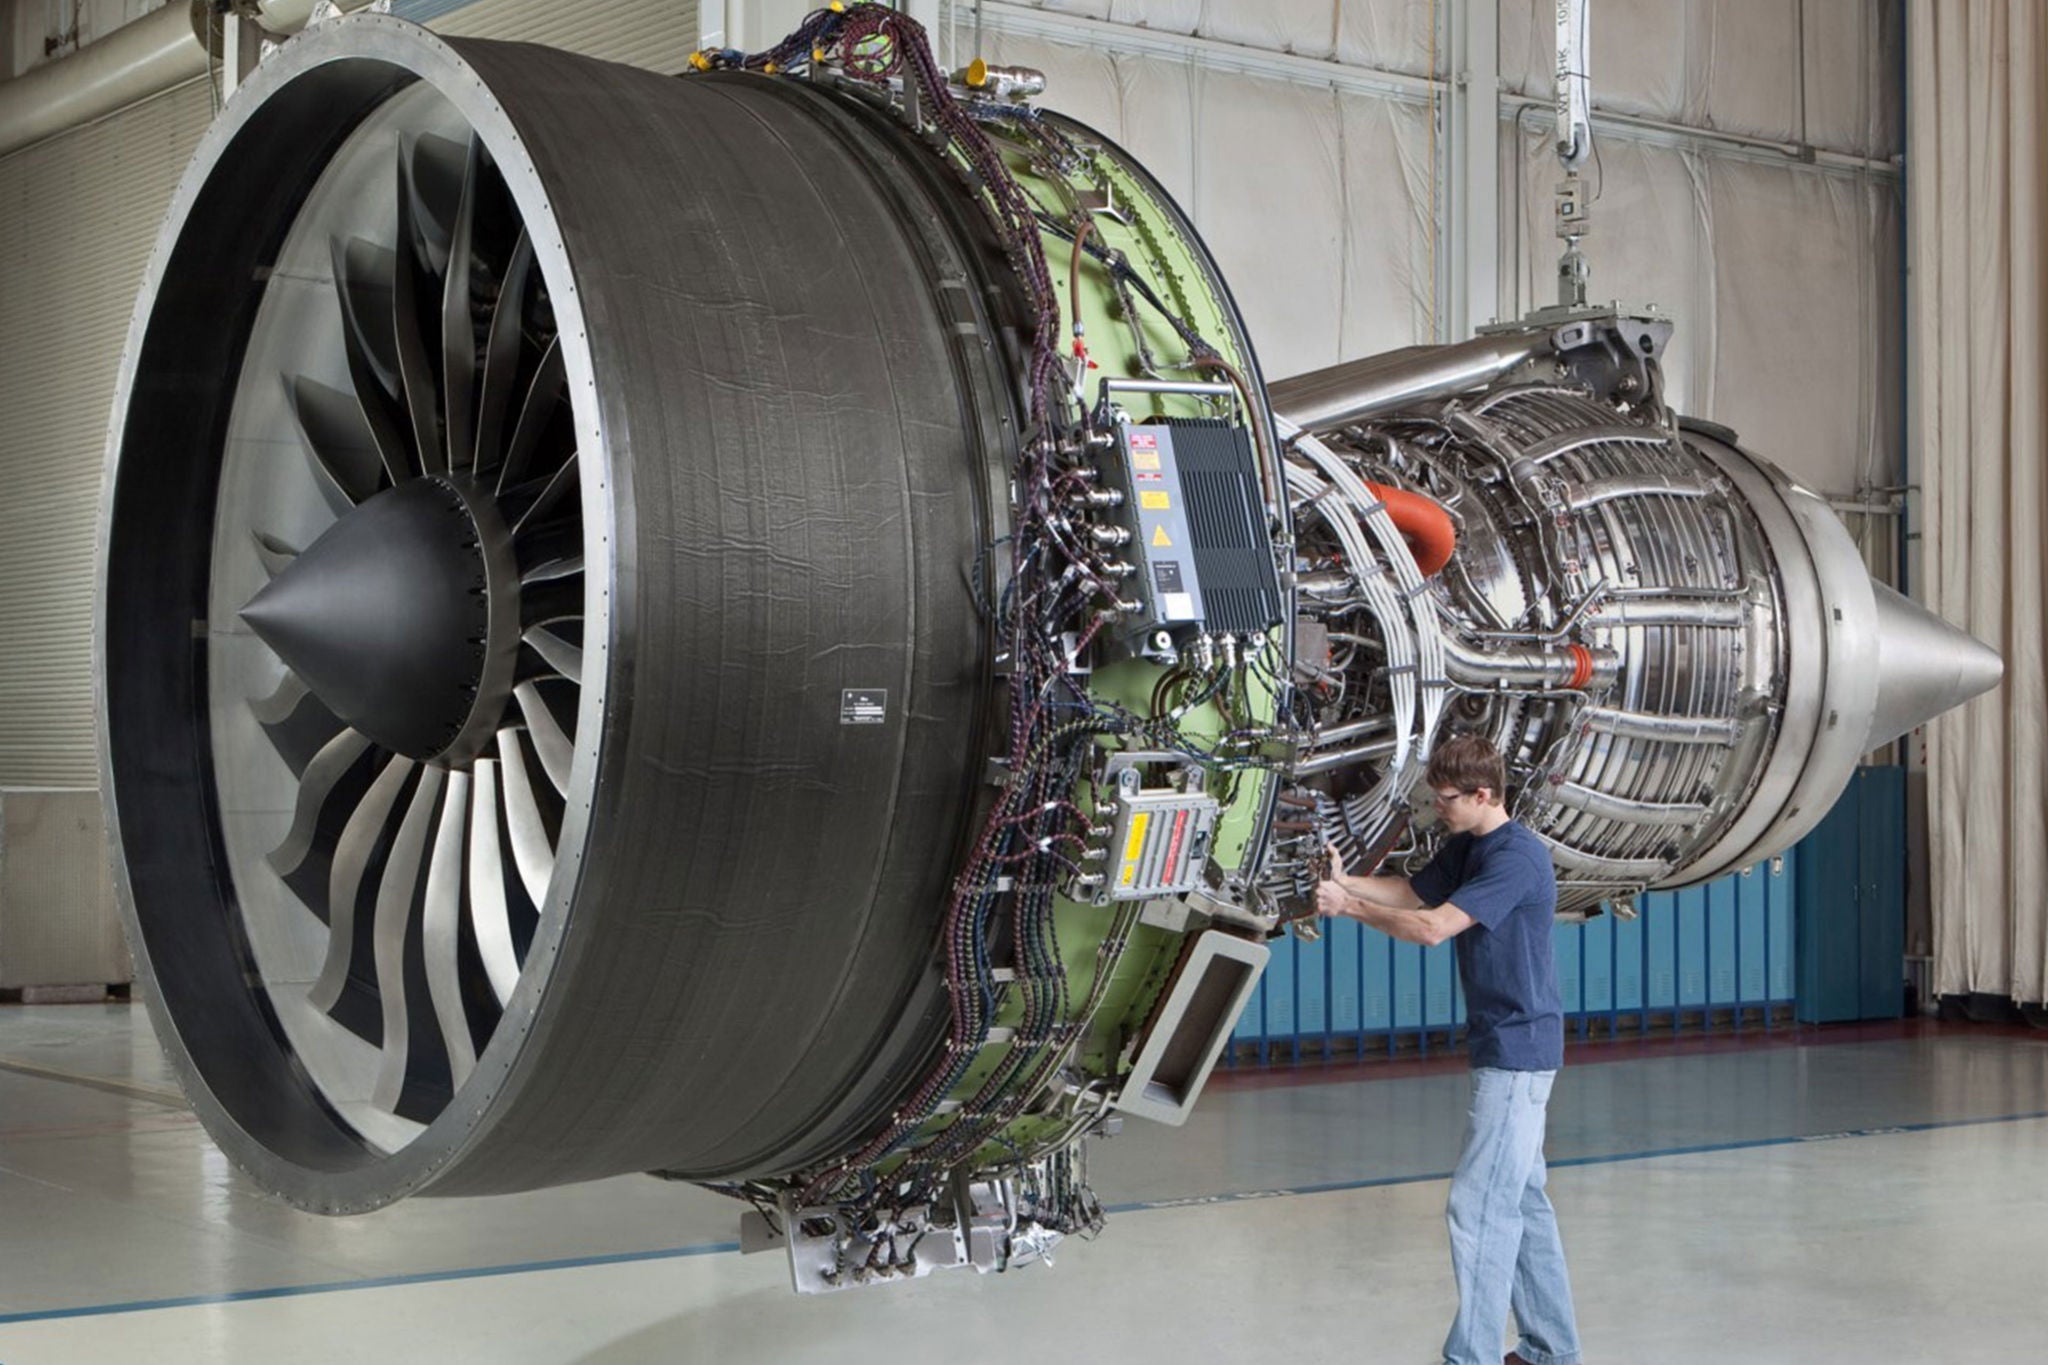 Giant interior jet engine, mechanic working